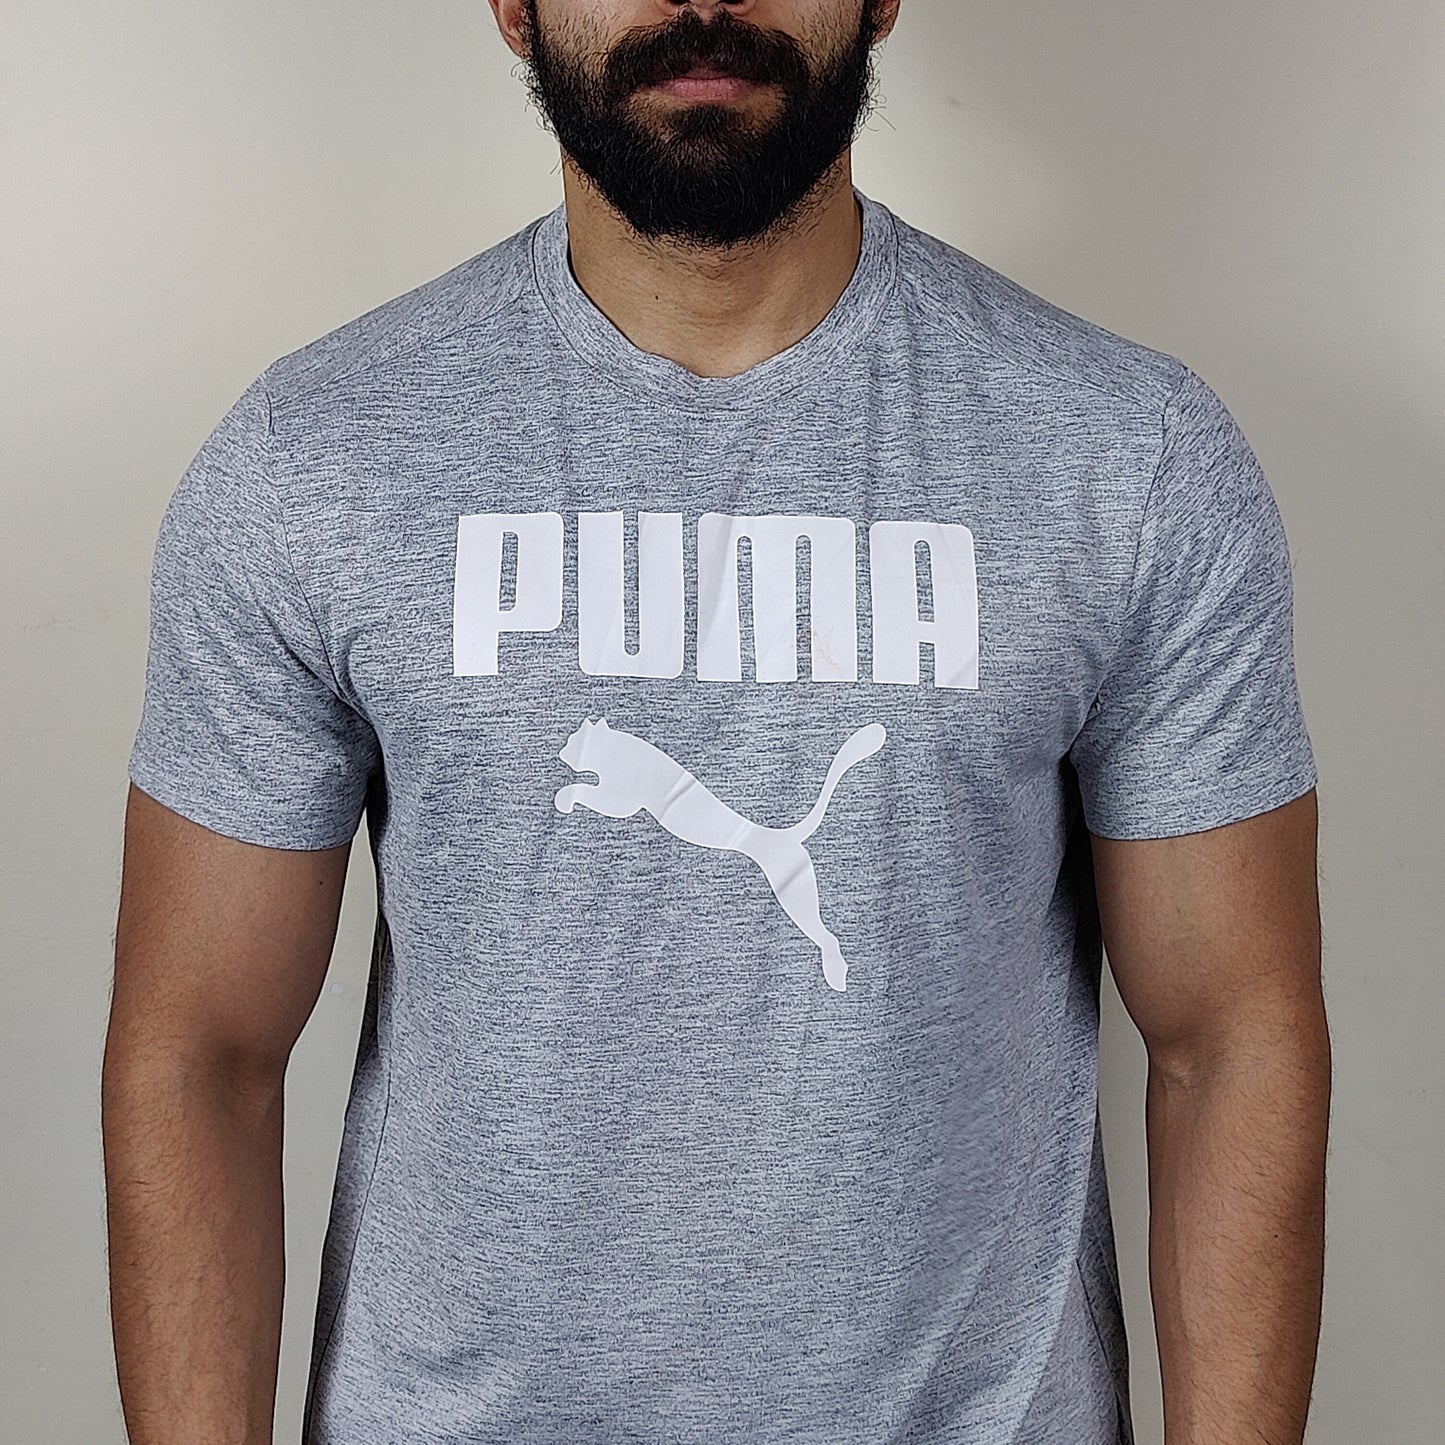 Puma Designer - Grey